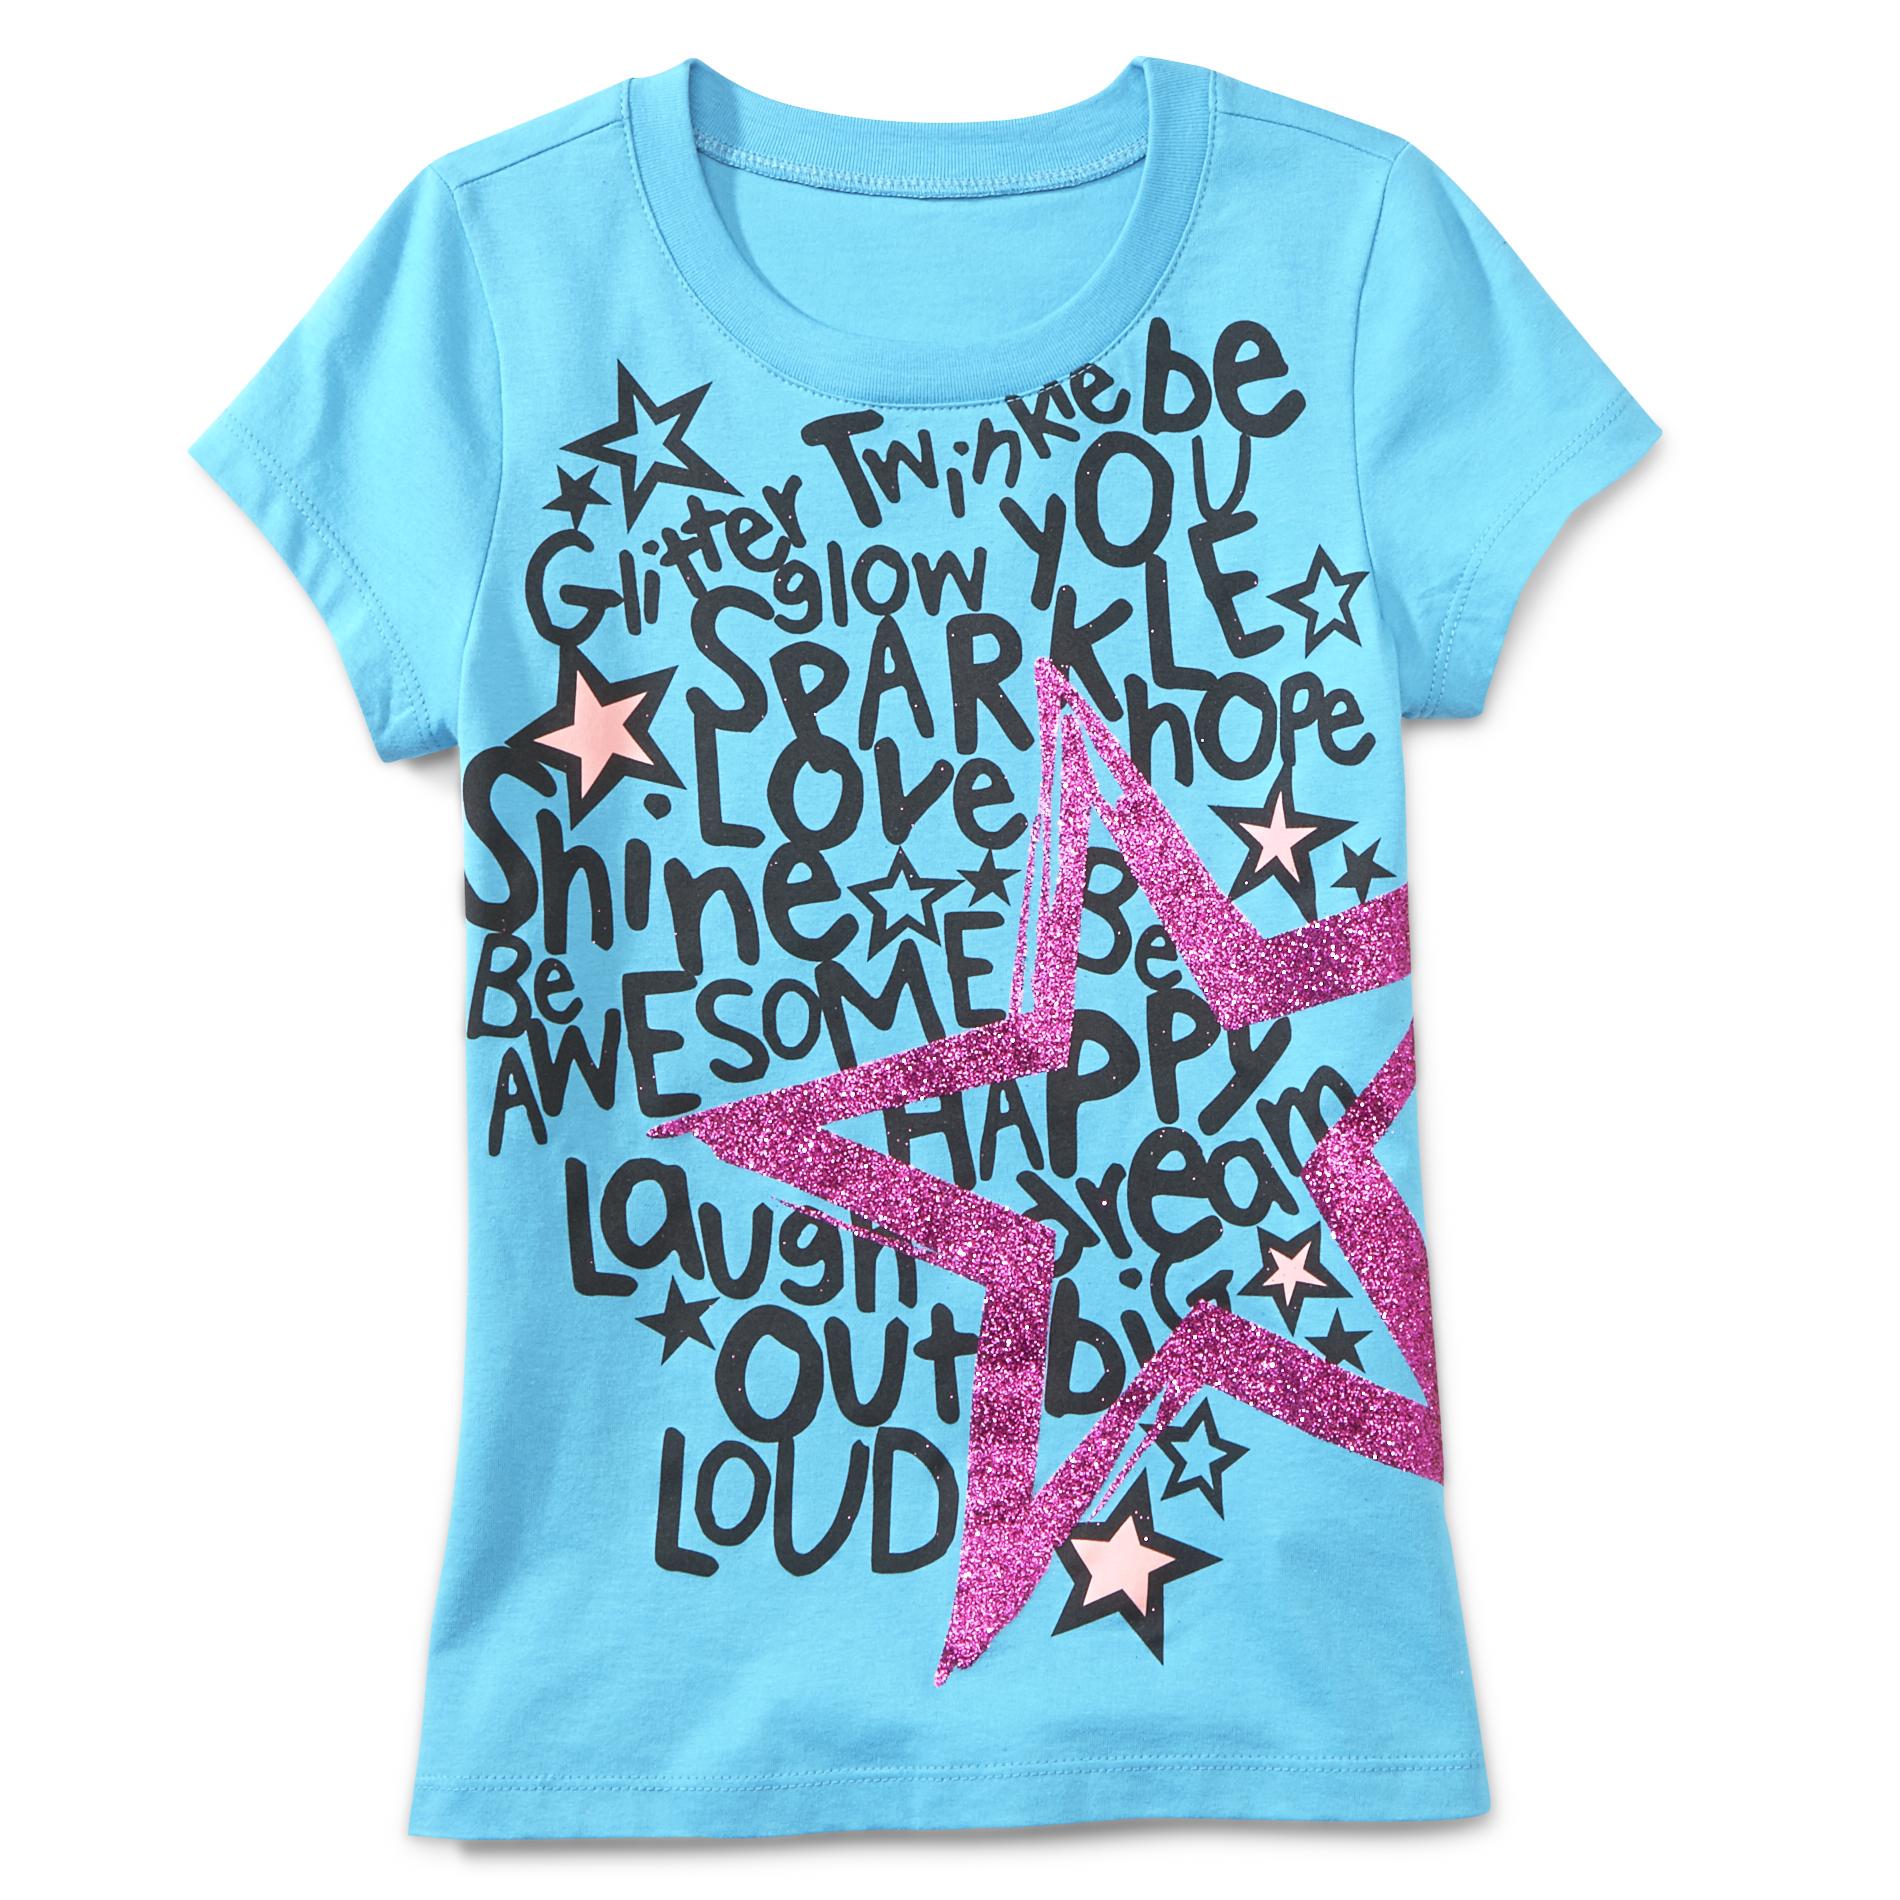 Route 66 Girl's Graphic T-Shirt - Glitter Star